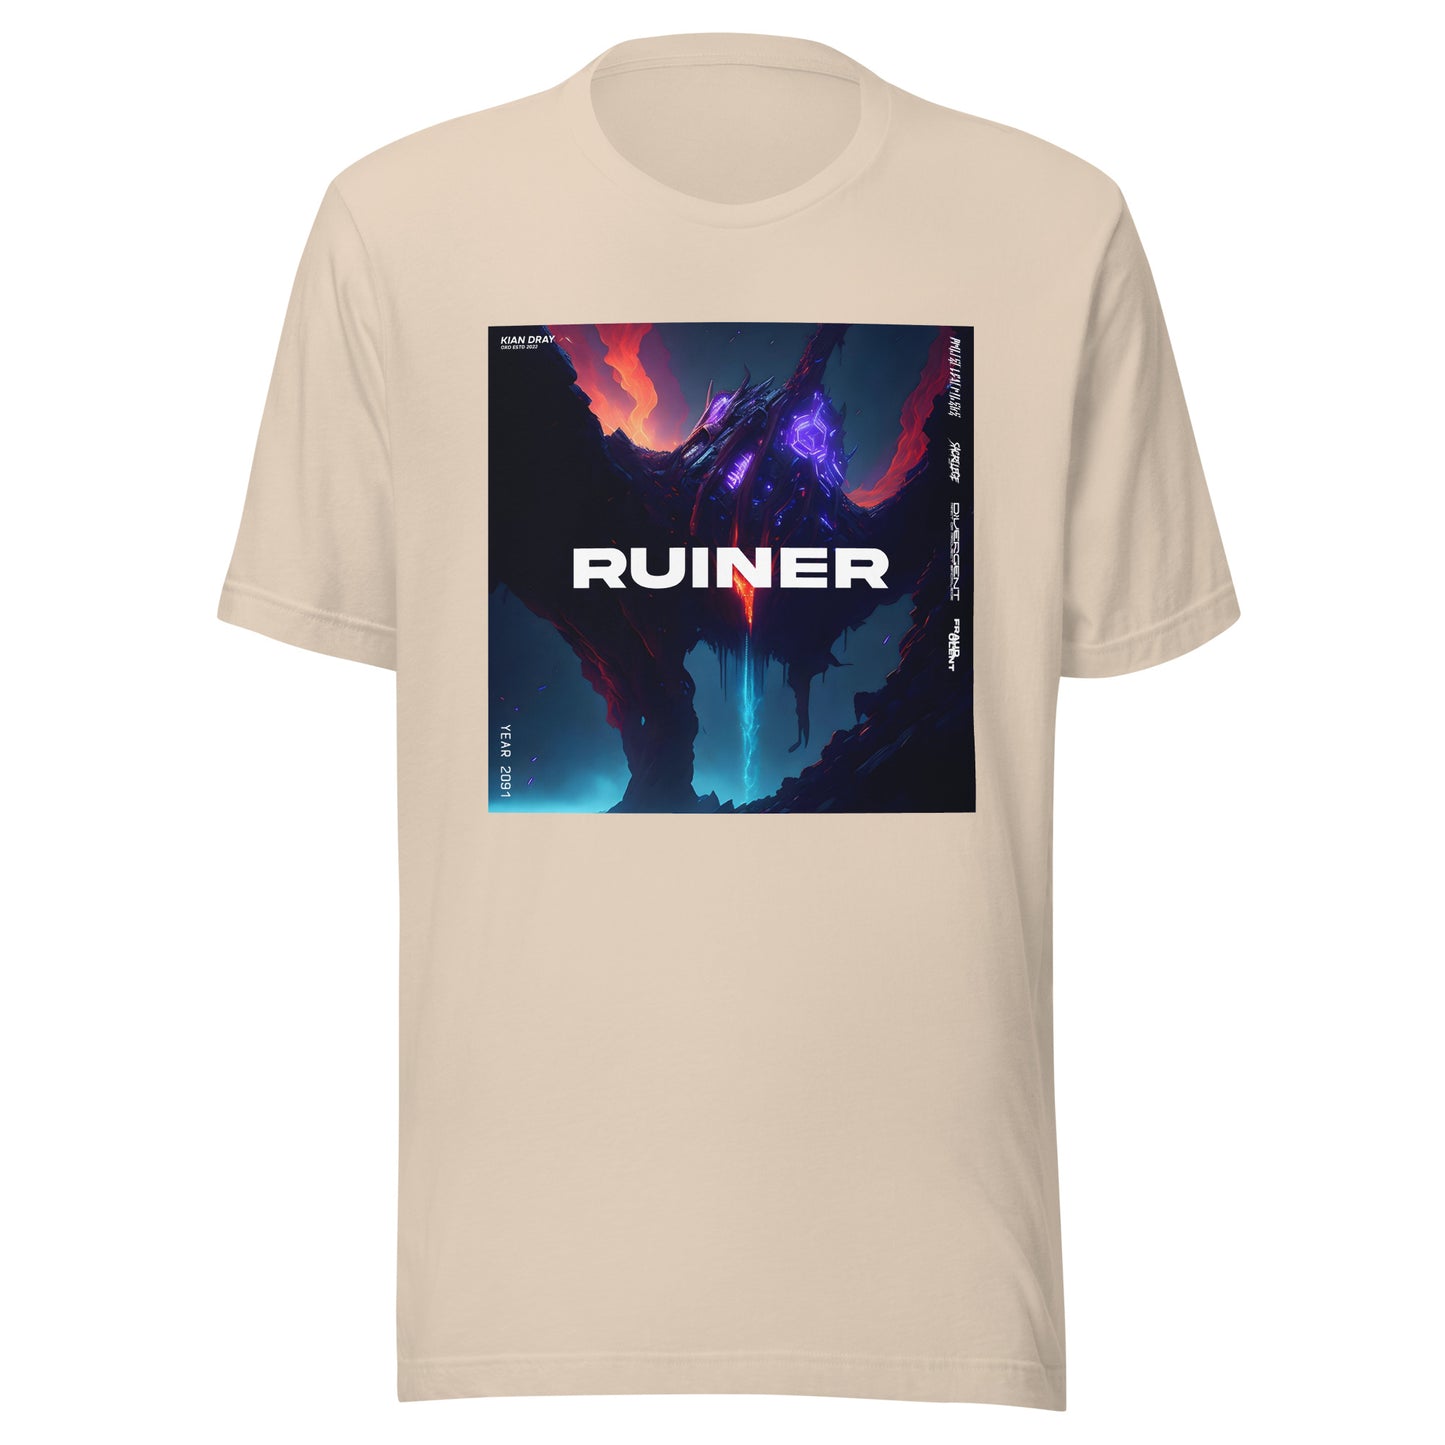 Kian Dray - Ruiner T-Shirt